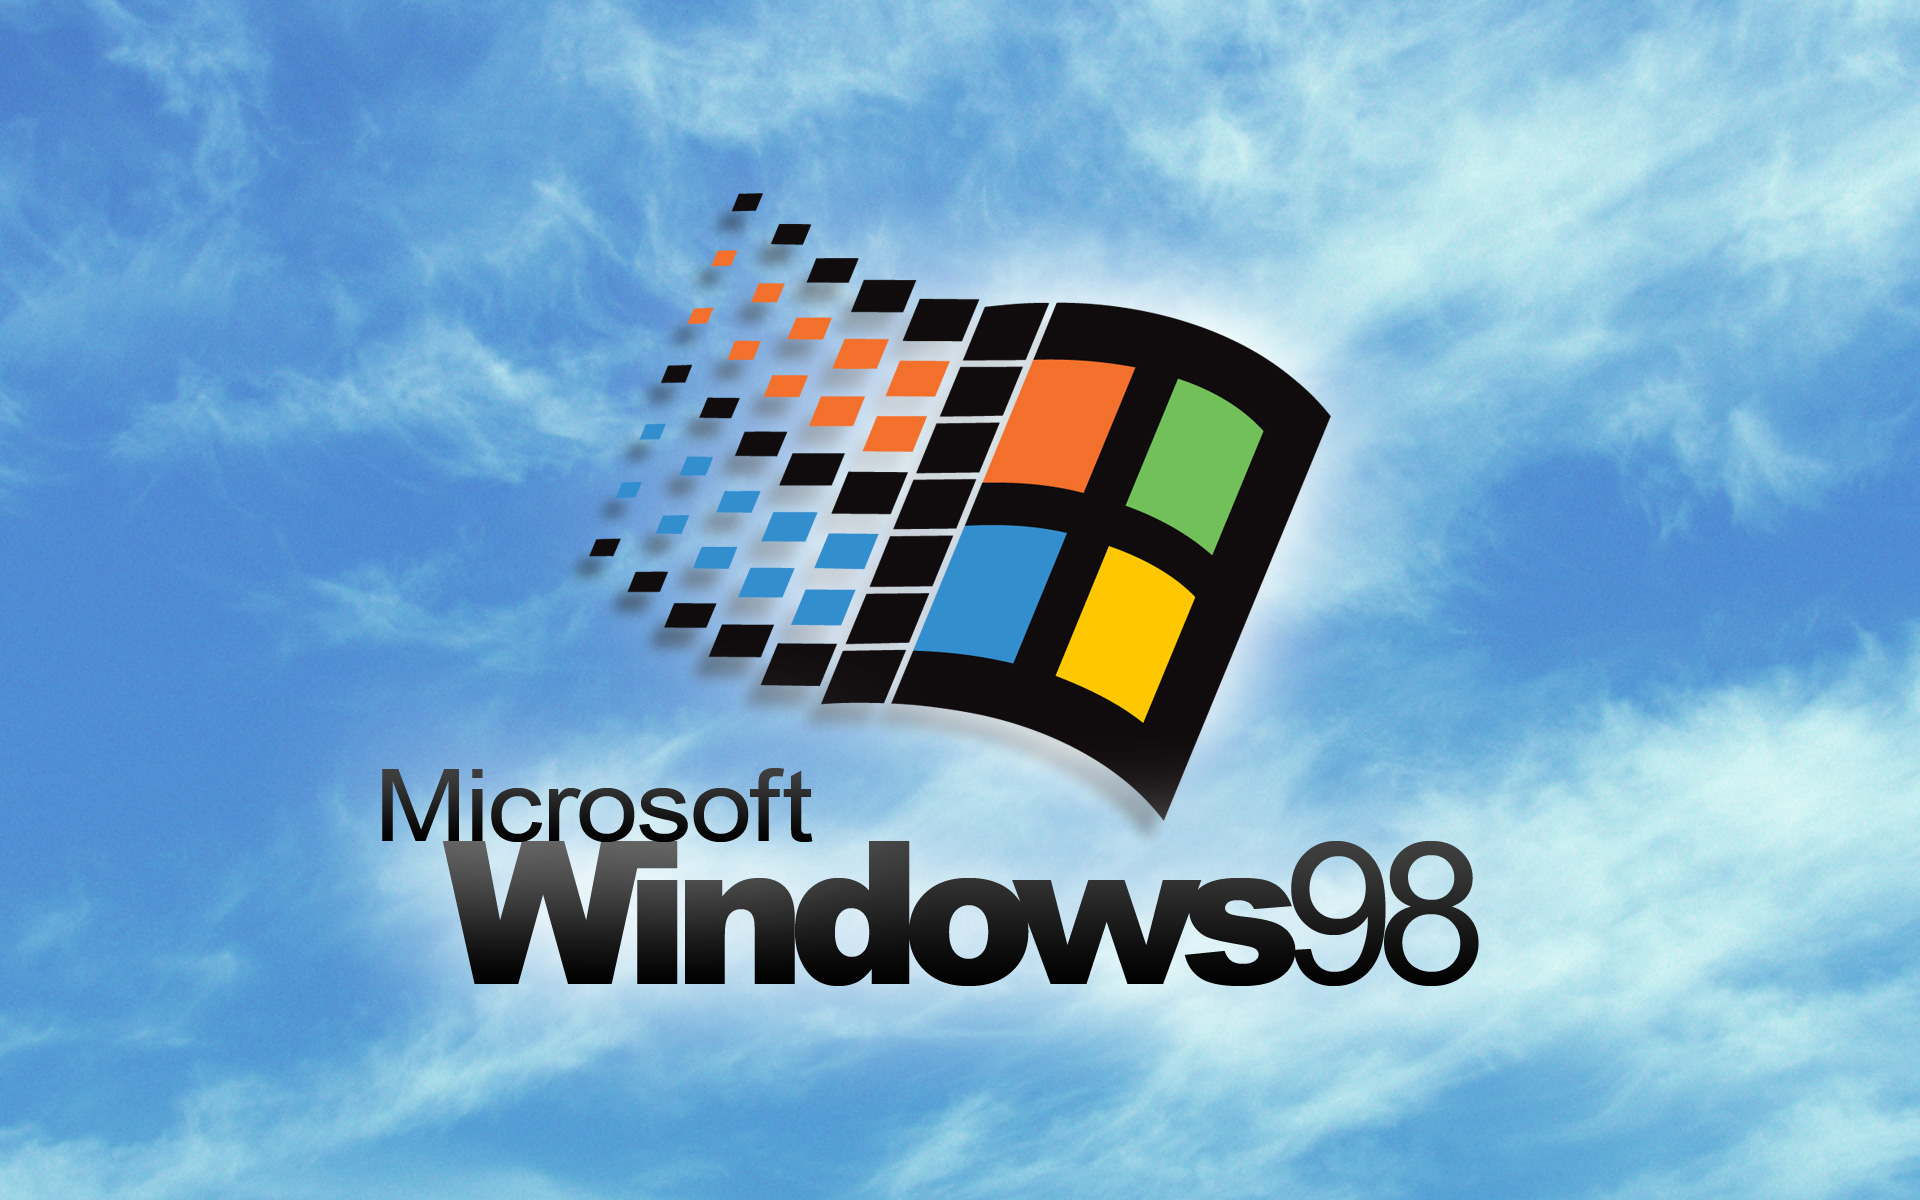 Windows 95 Wallpaper Hd Remake By Martinseglitis On Deviantart